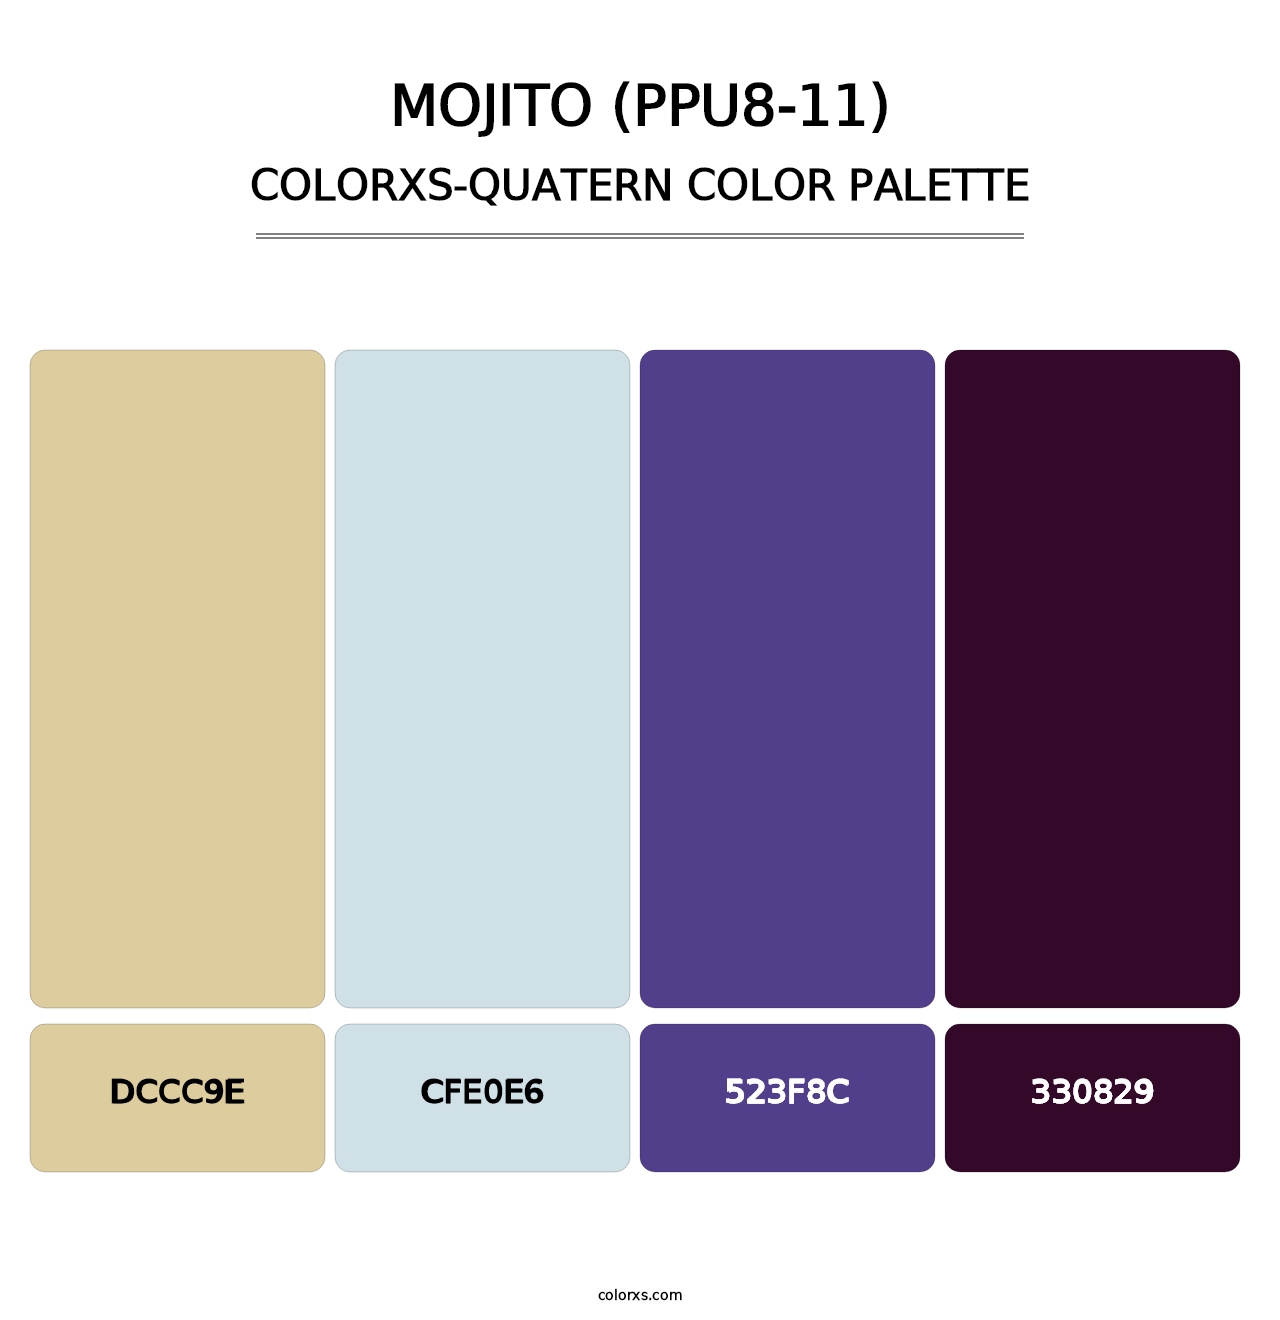 Mojito (PPU8-11) - Colorxs Quatern Palette